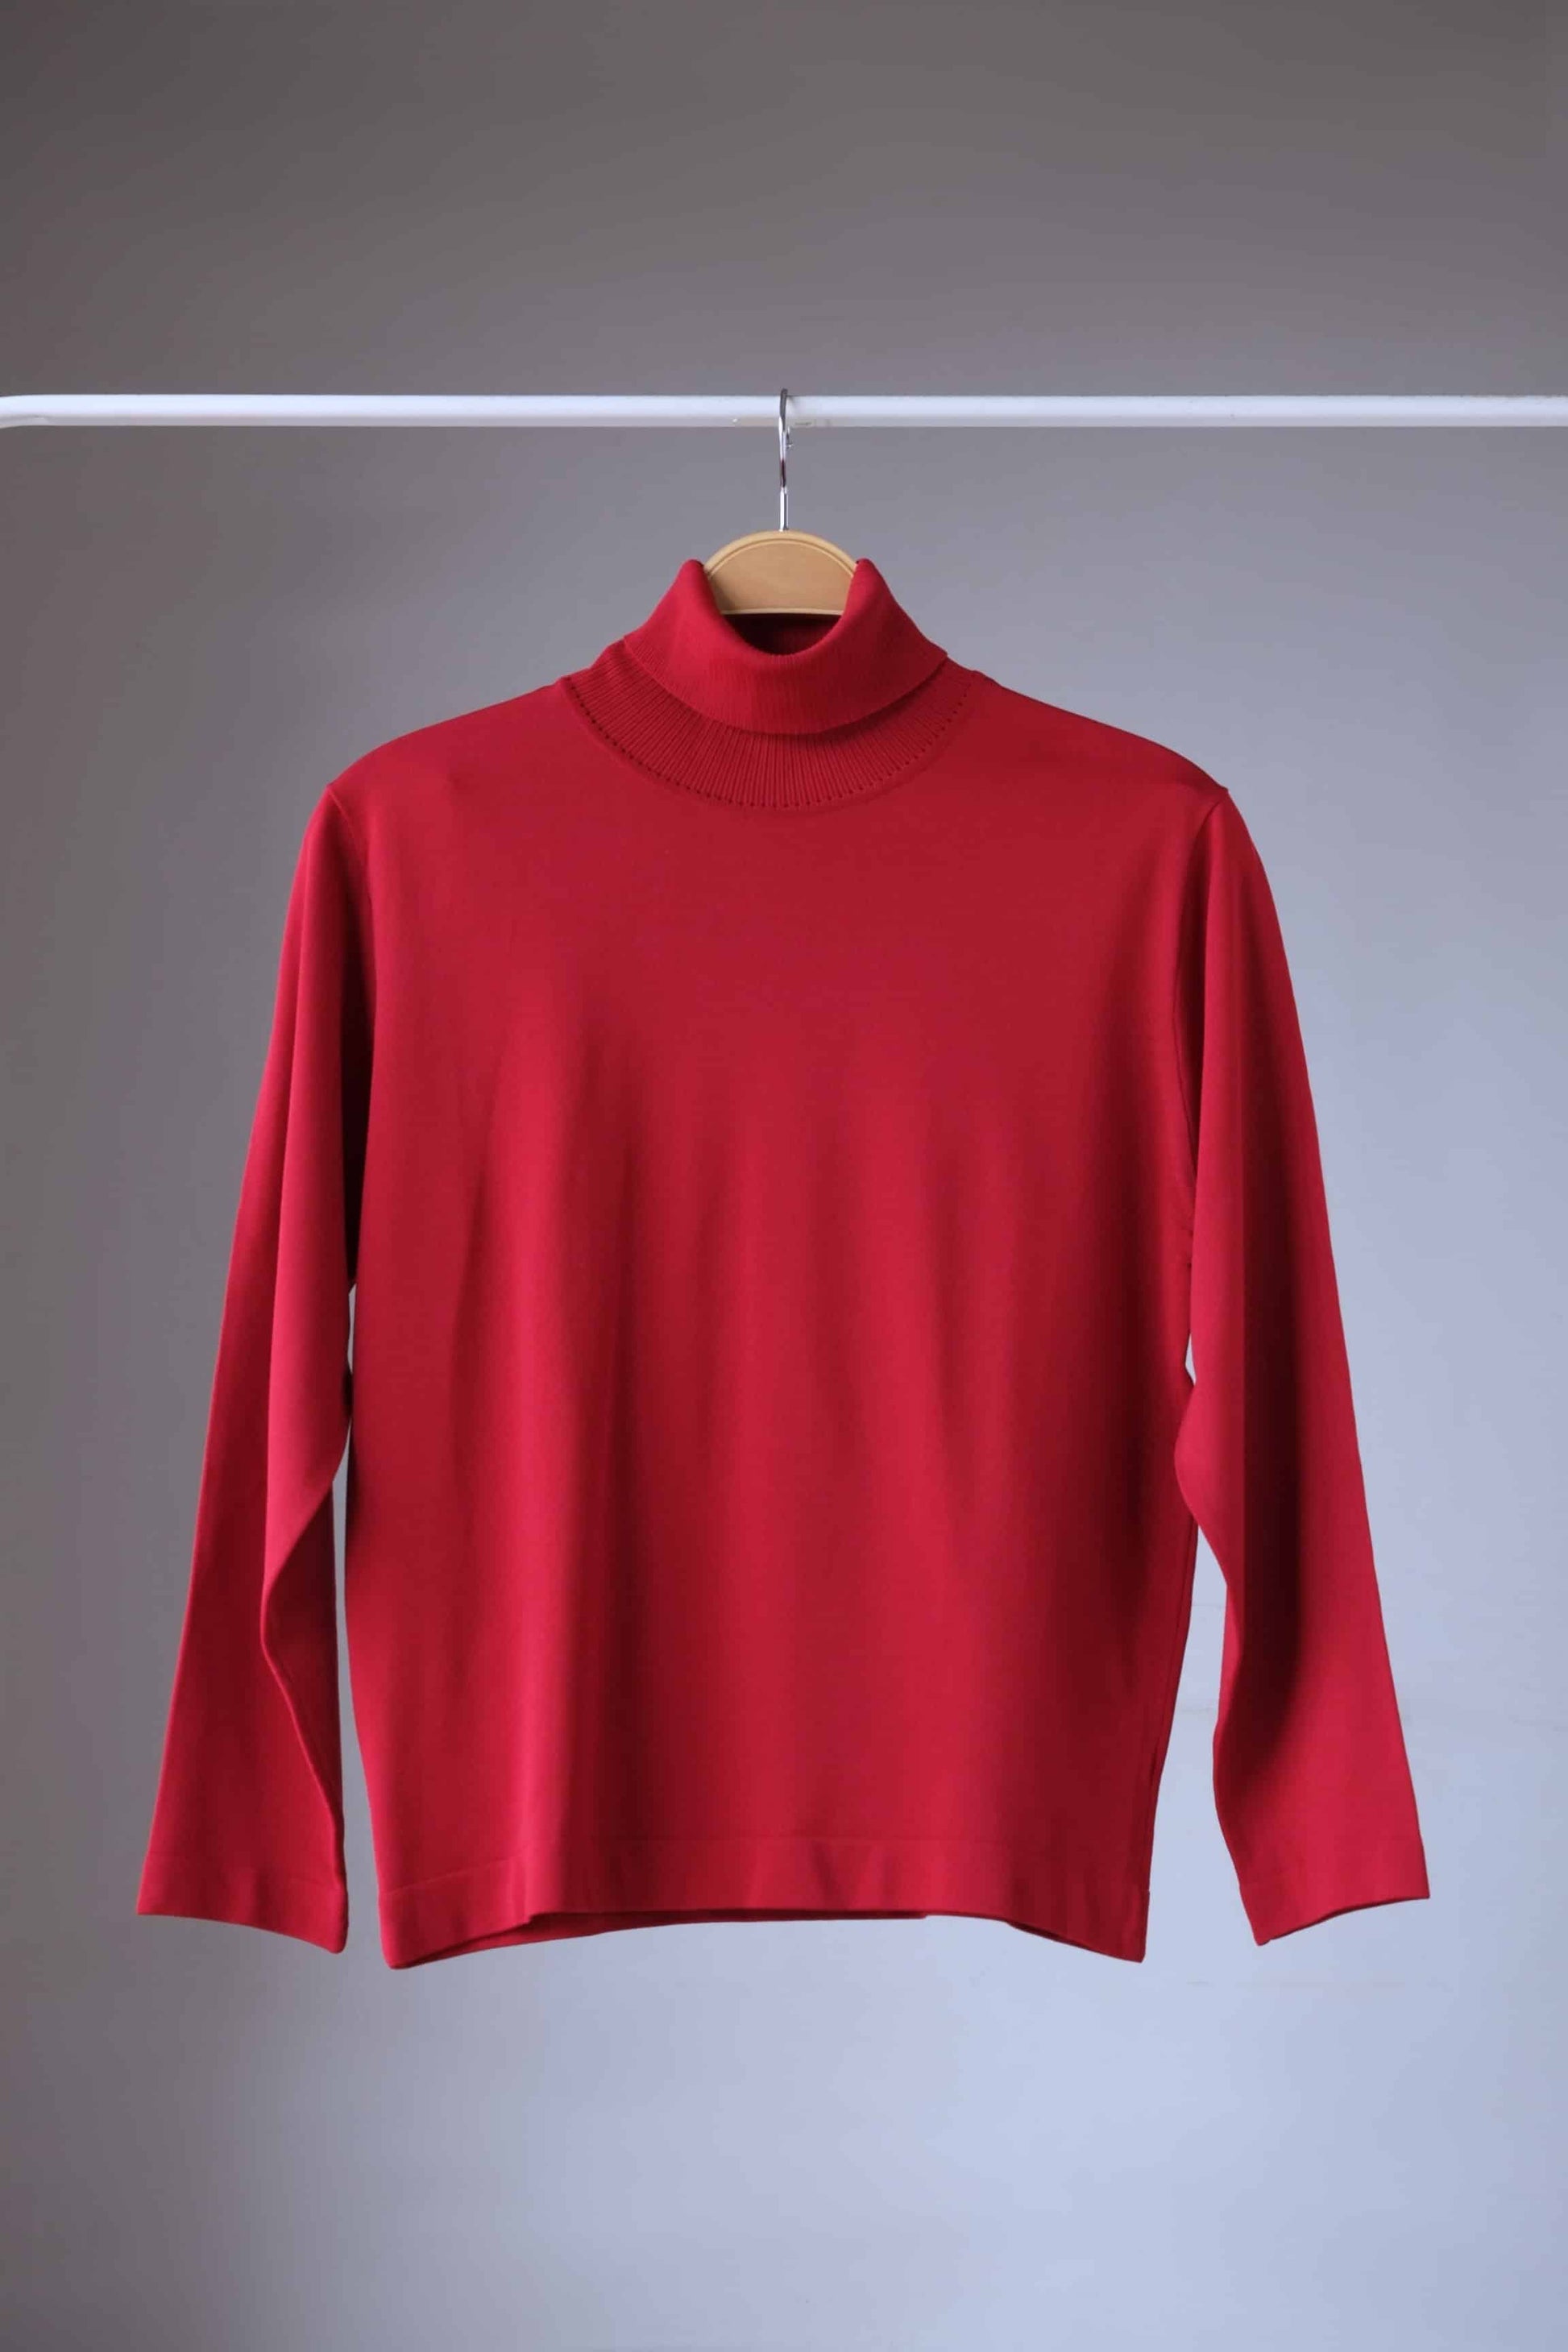 Rollneck 70's Sweater burgundy